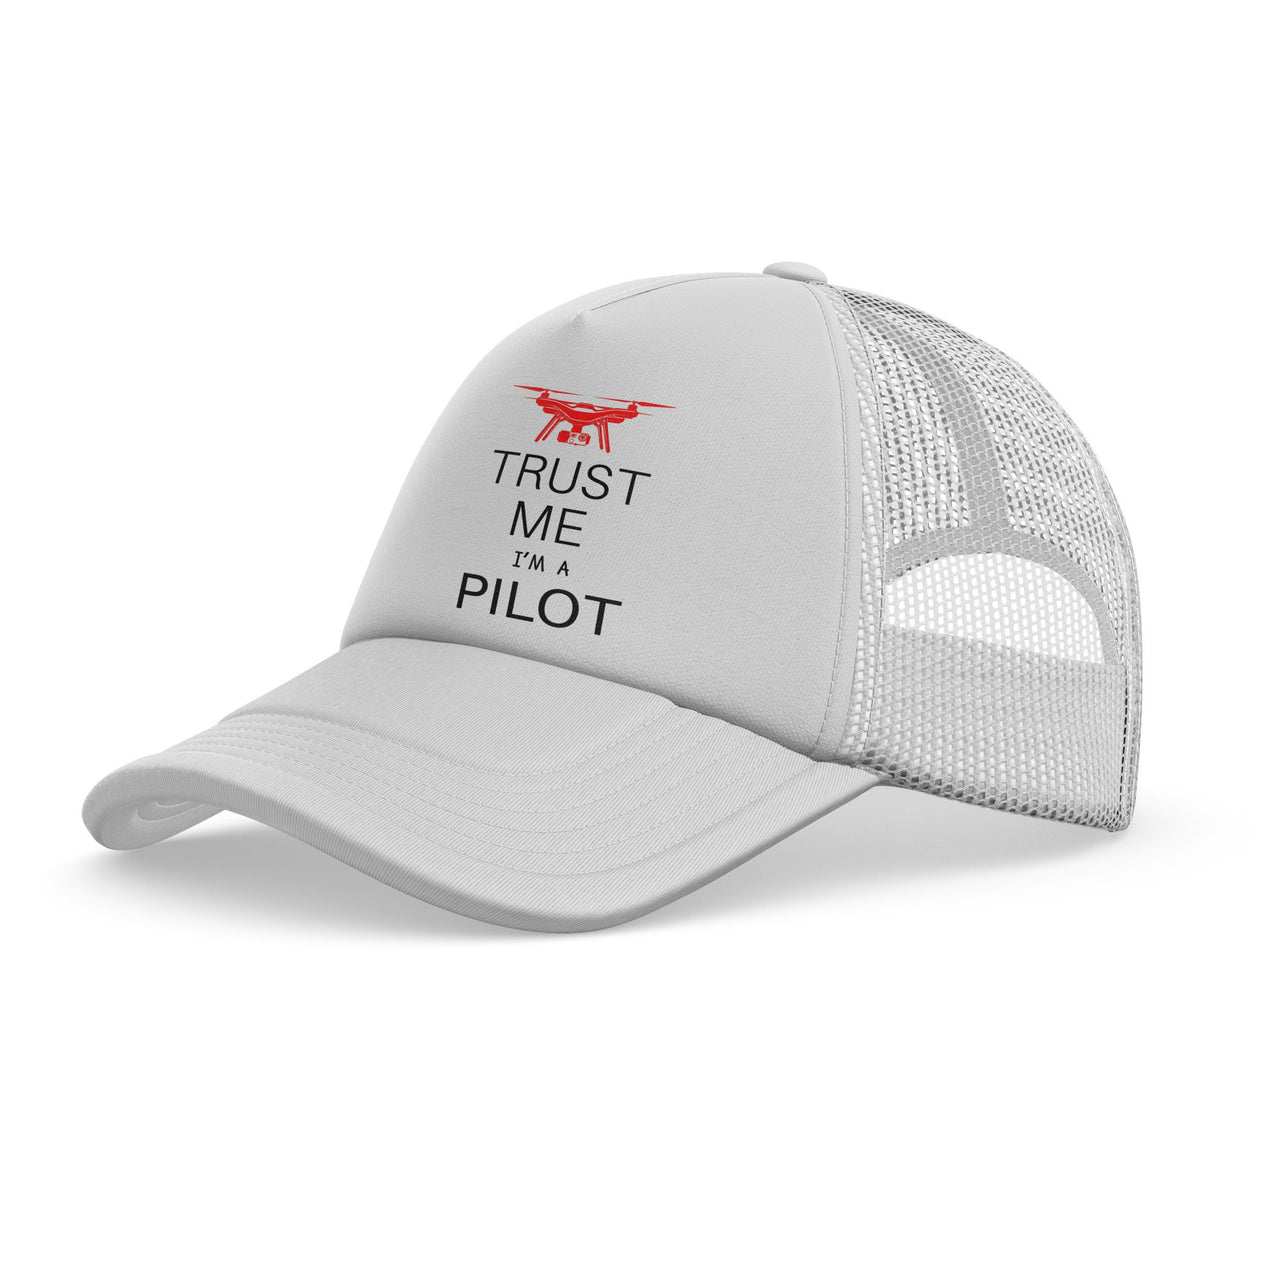 Trust Me I'm a Pilot (Drone) Designed Trucker Caps & Hats